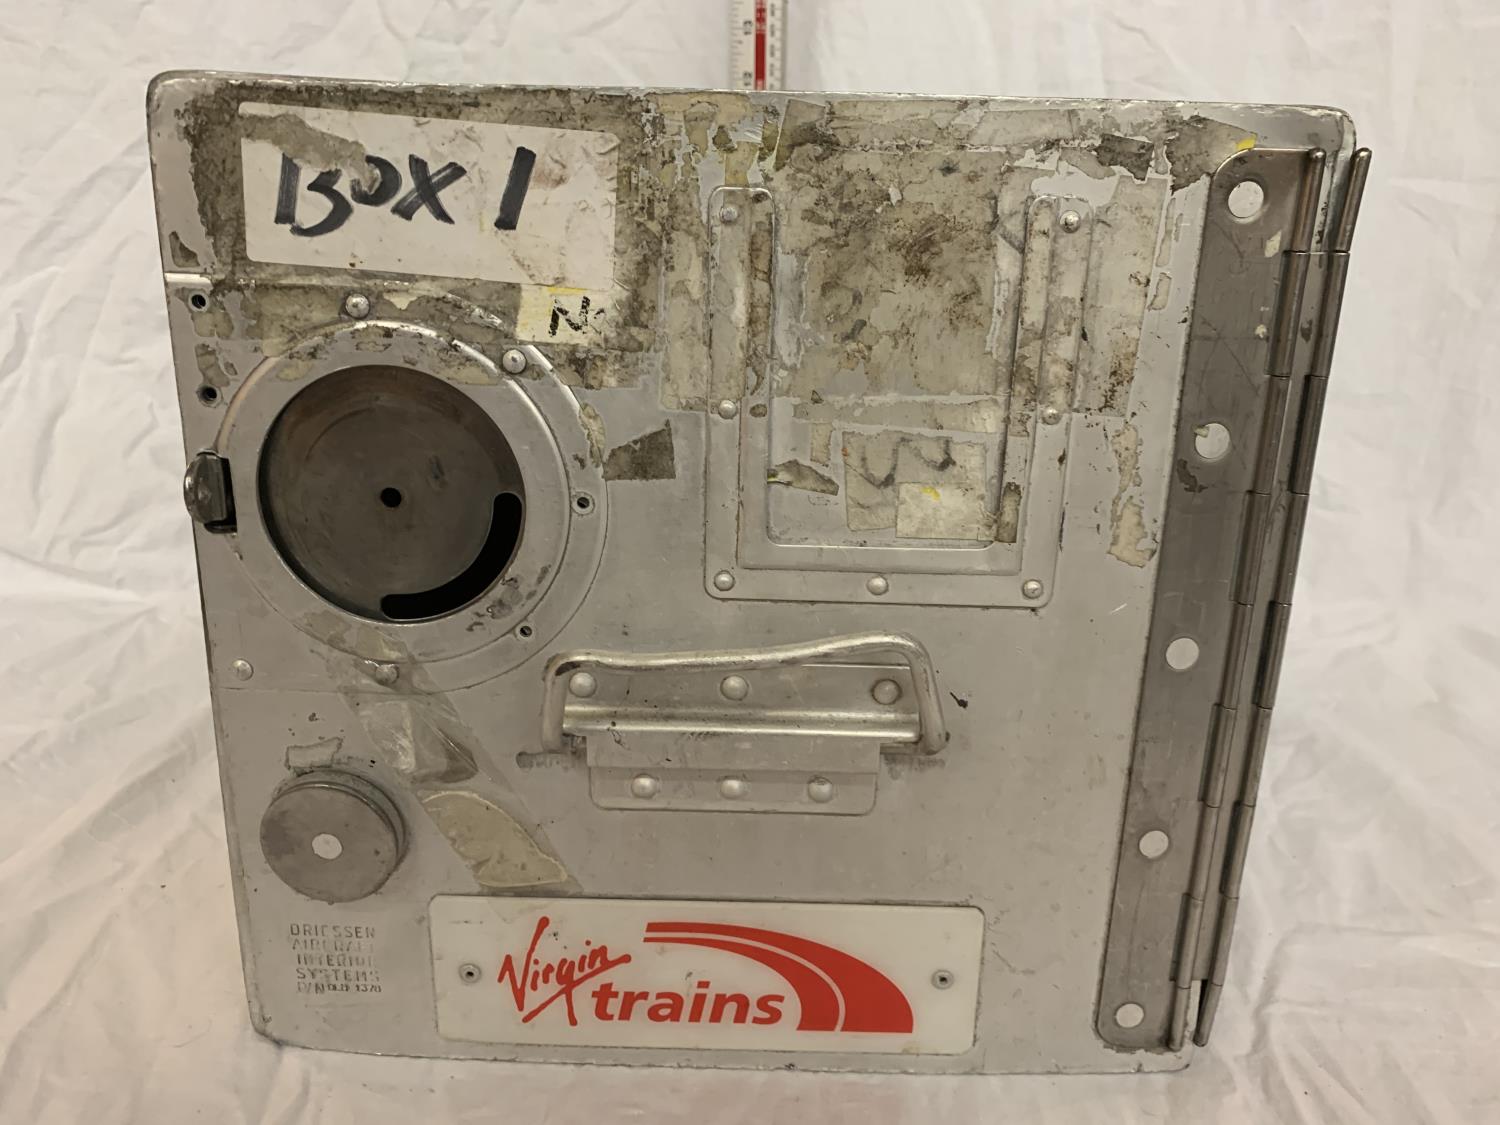 A 'VIRGIN TRAINS' TIN BOX - Image 3 of 5